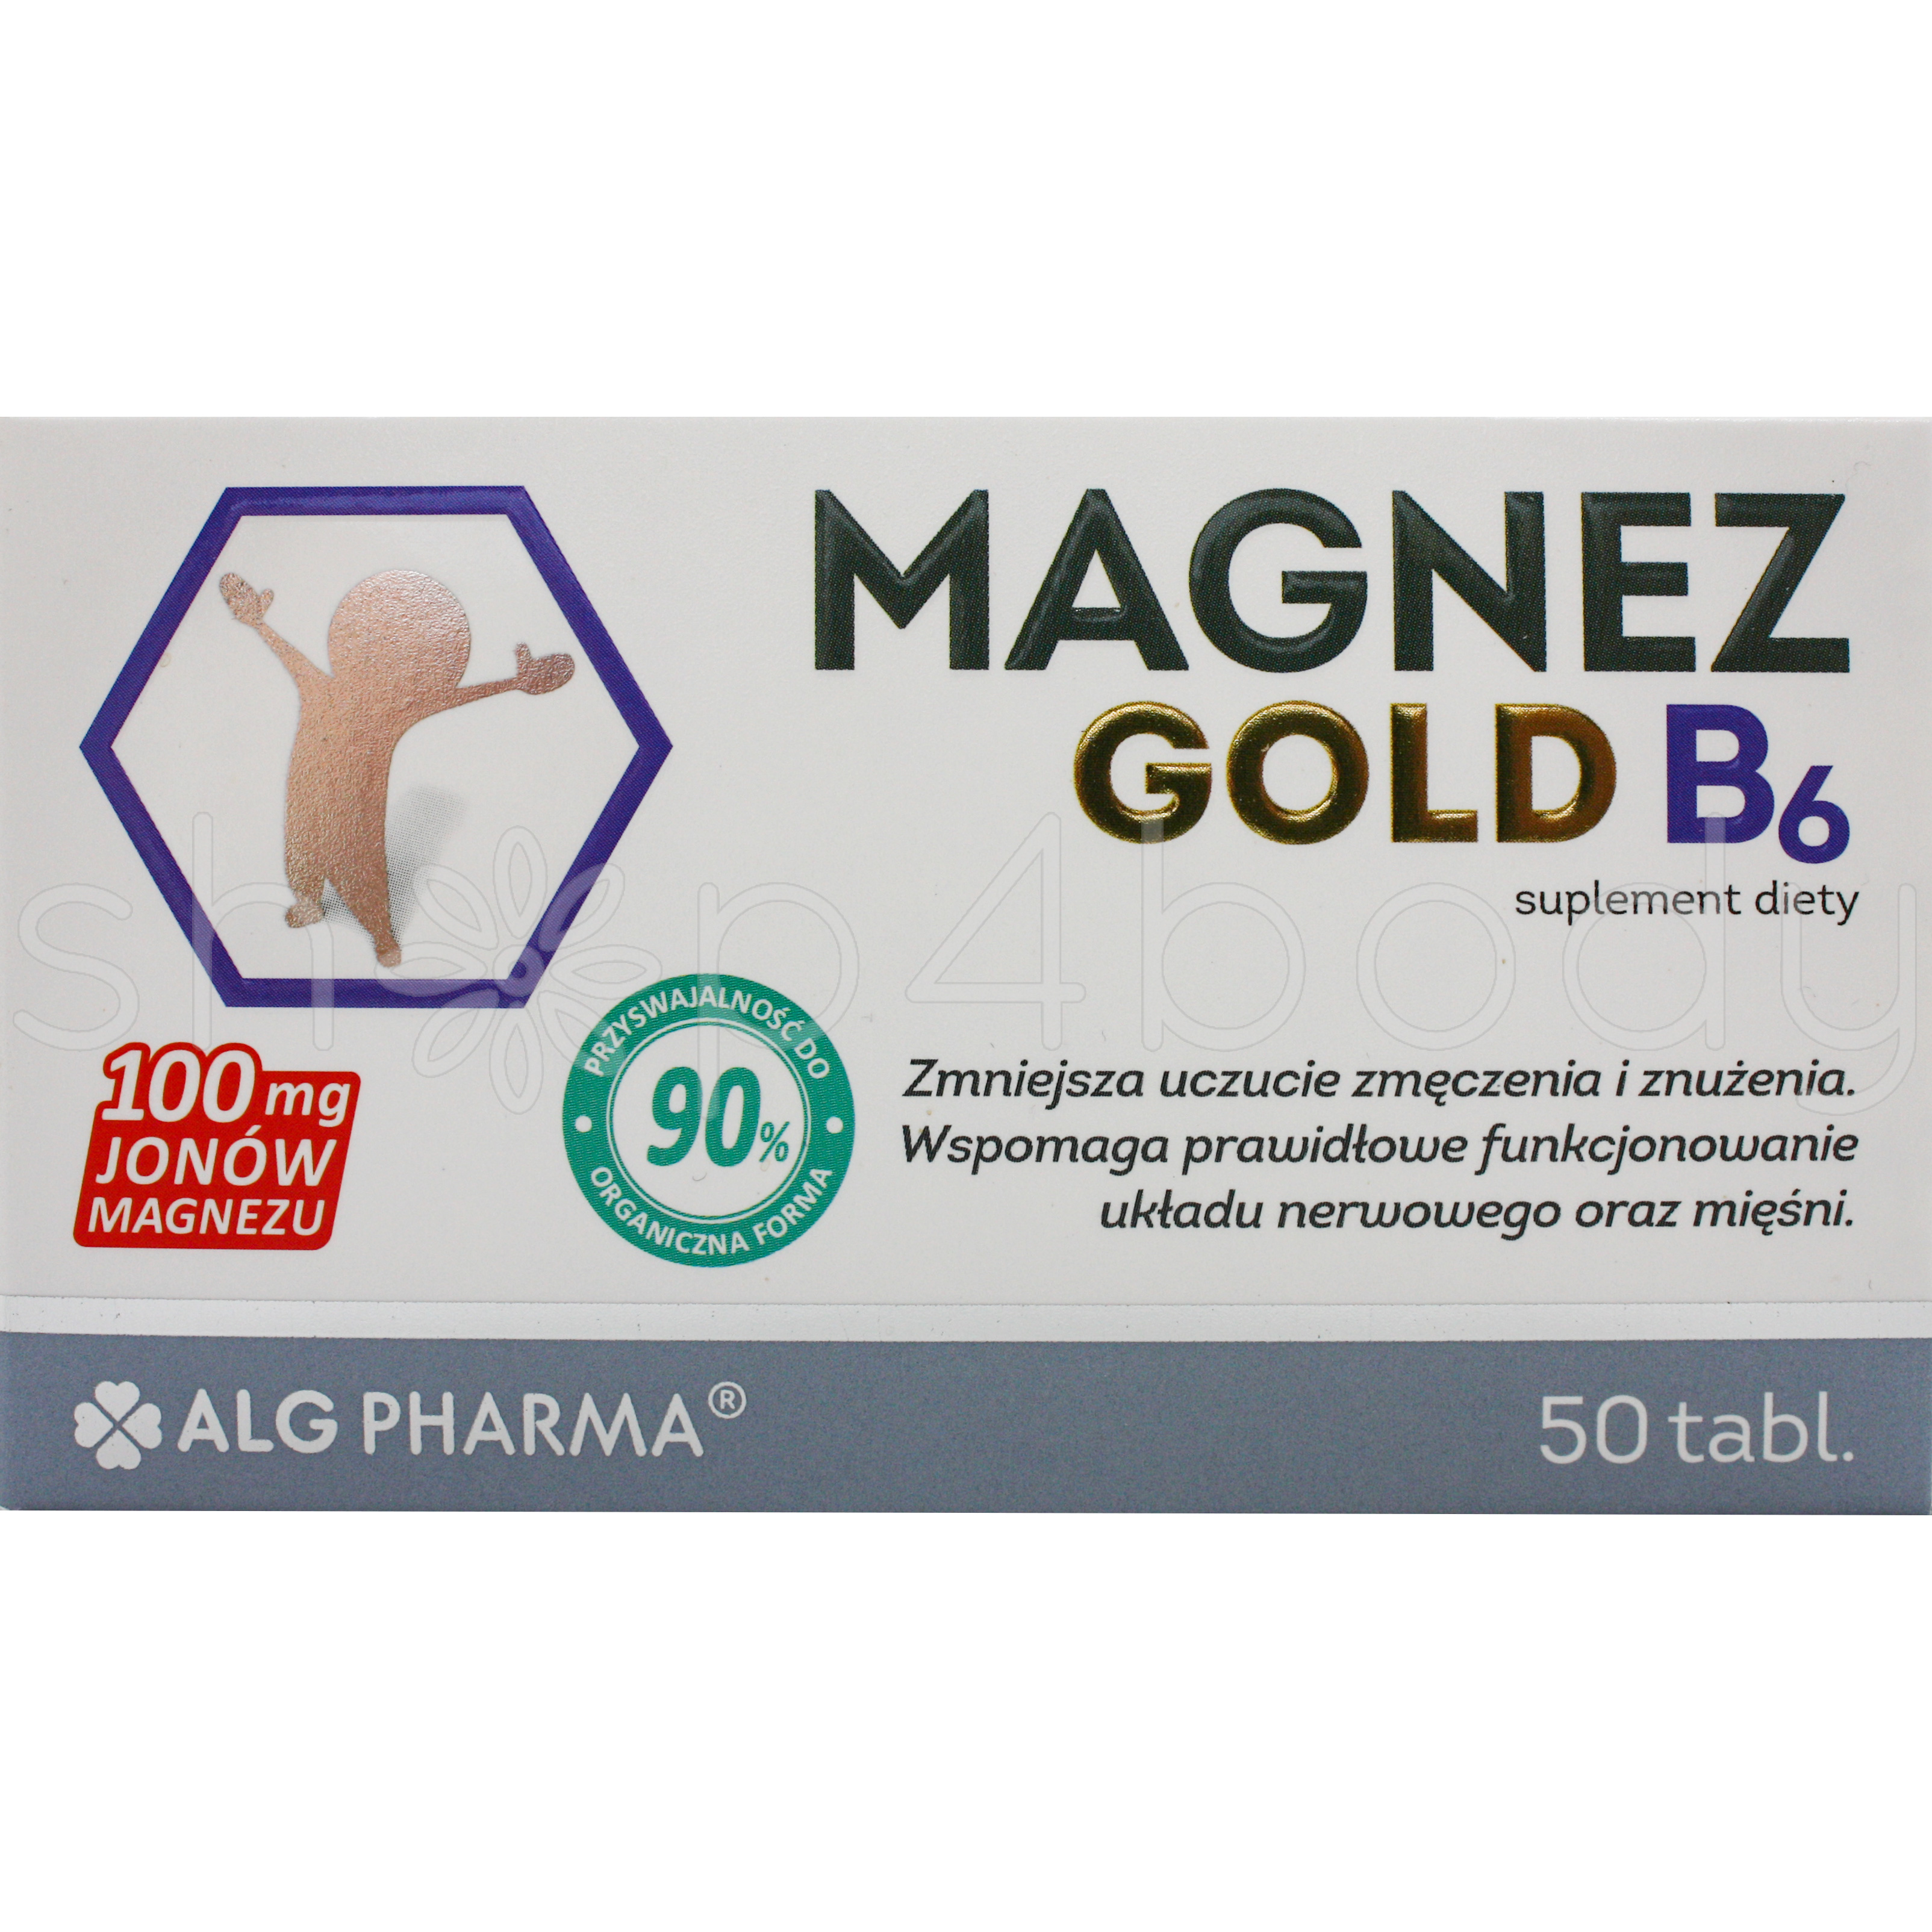 magnez-gold-magnesium-med-b6-50-tabletter-.jpg